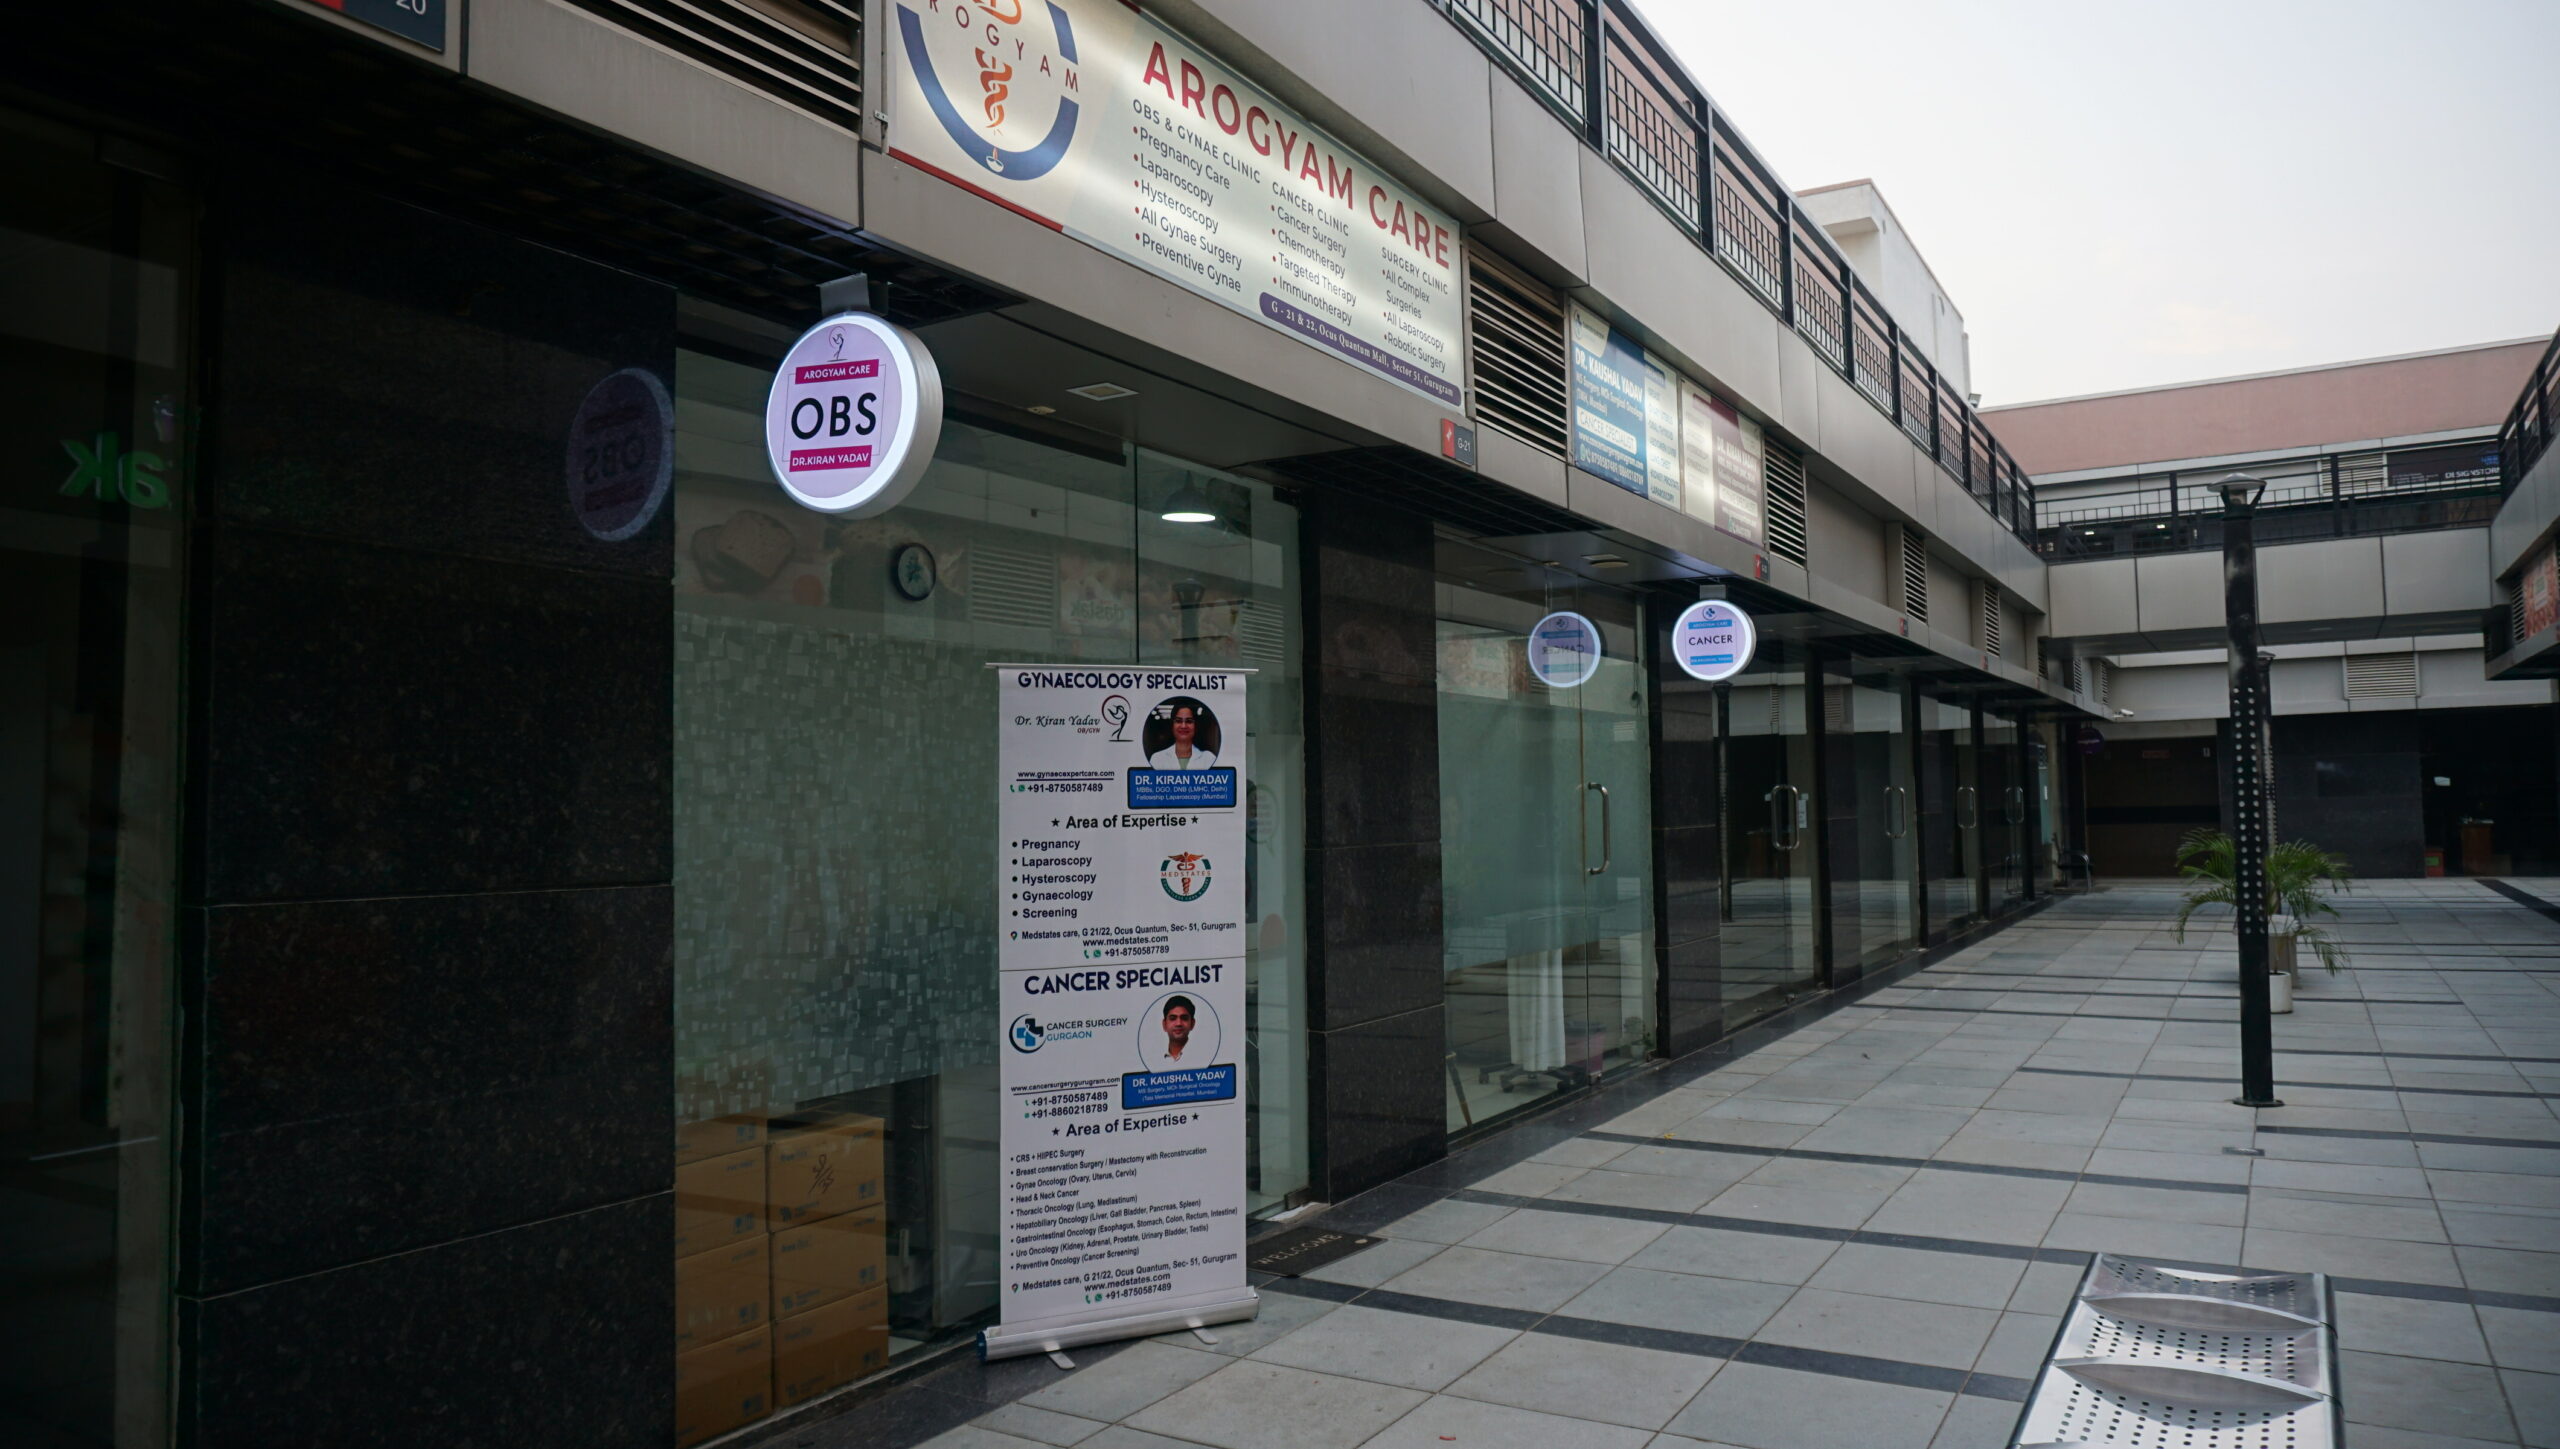 Arogyam Care clinic sector 51 Gurgaon